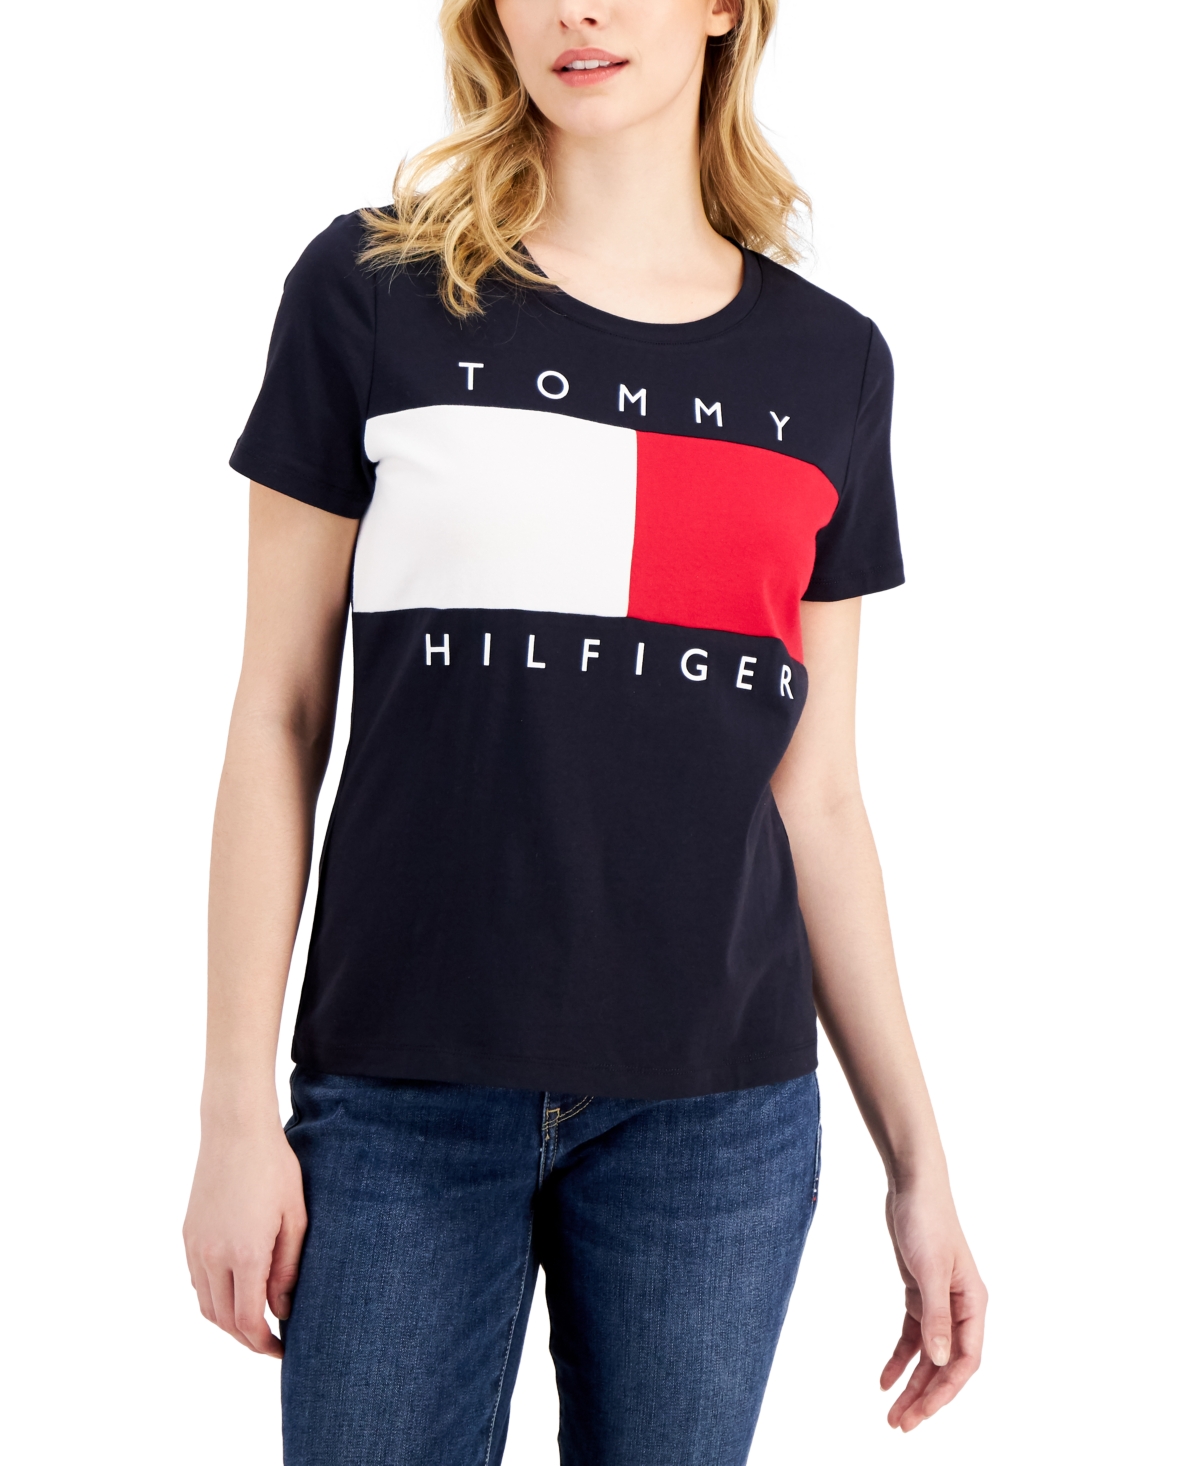 TOMMY HILFIGER WOMEN'S BIG FLAG LOGO T-SHIRT